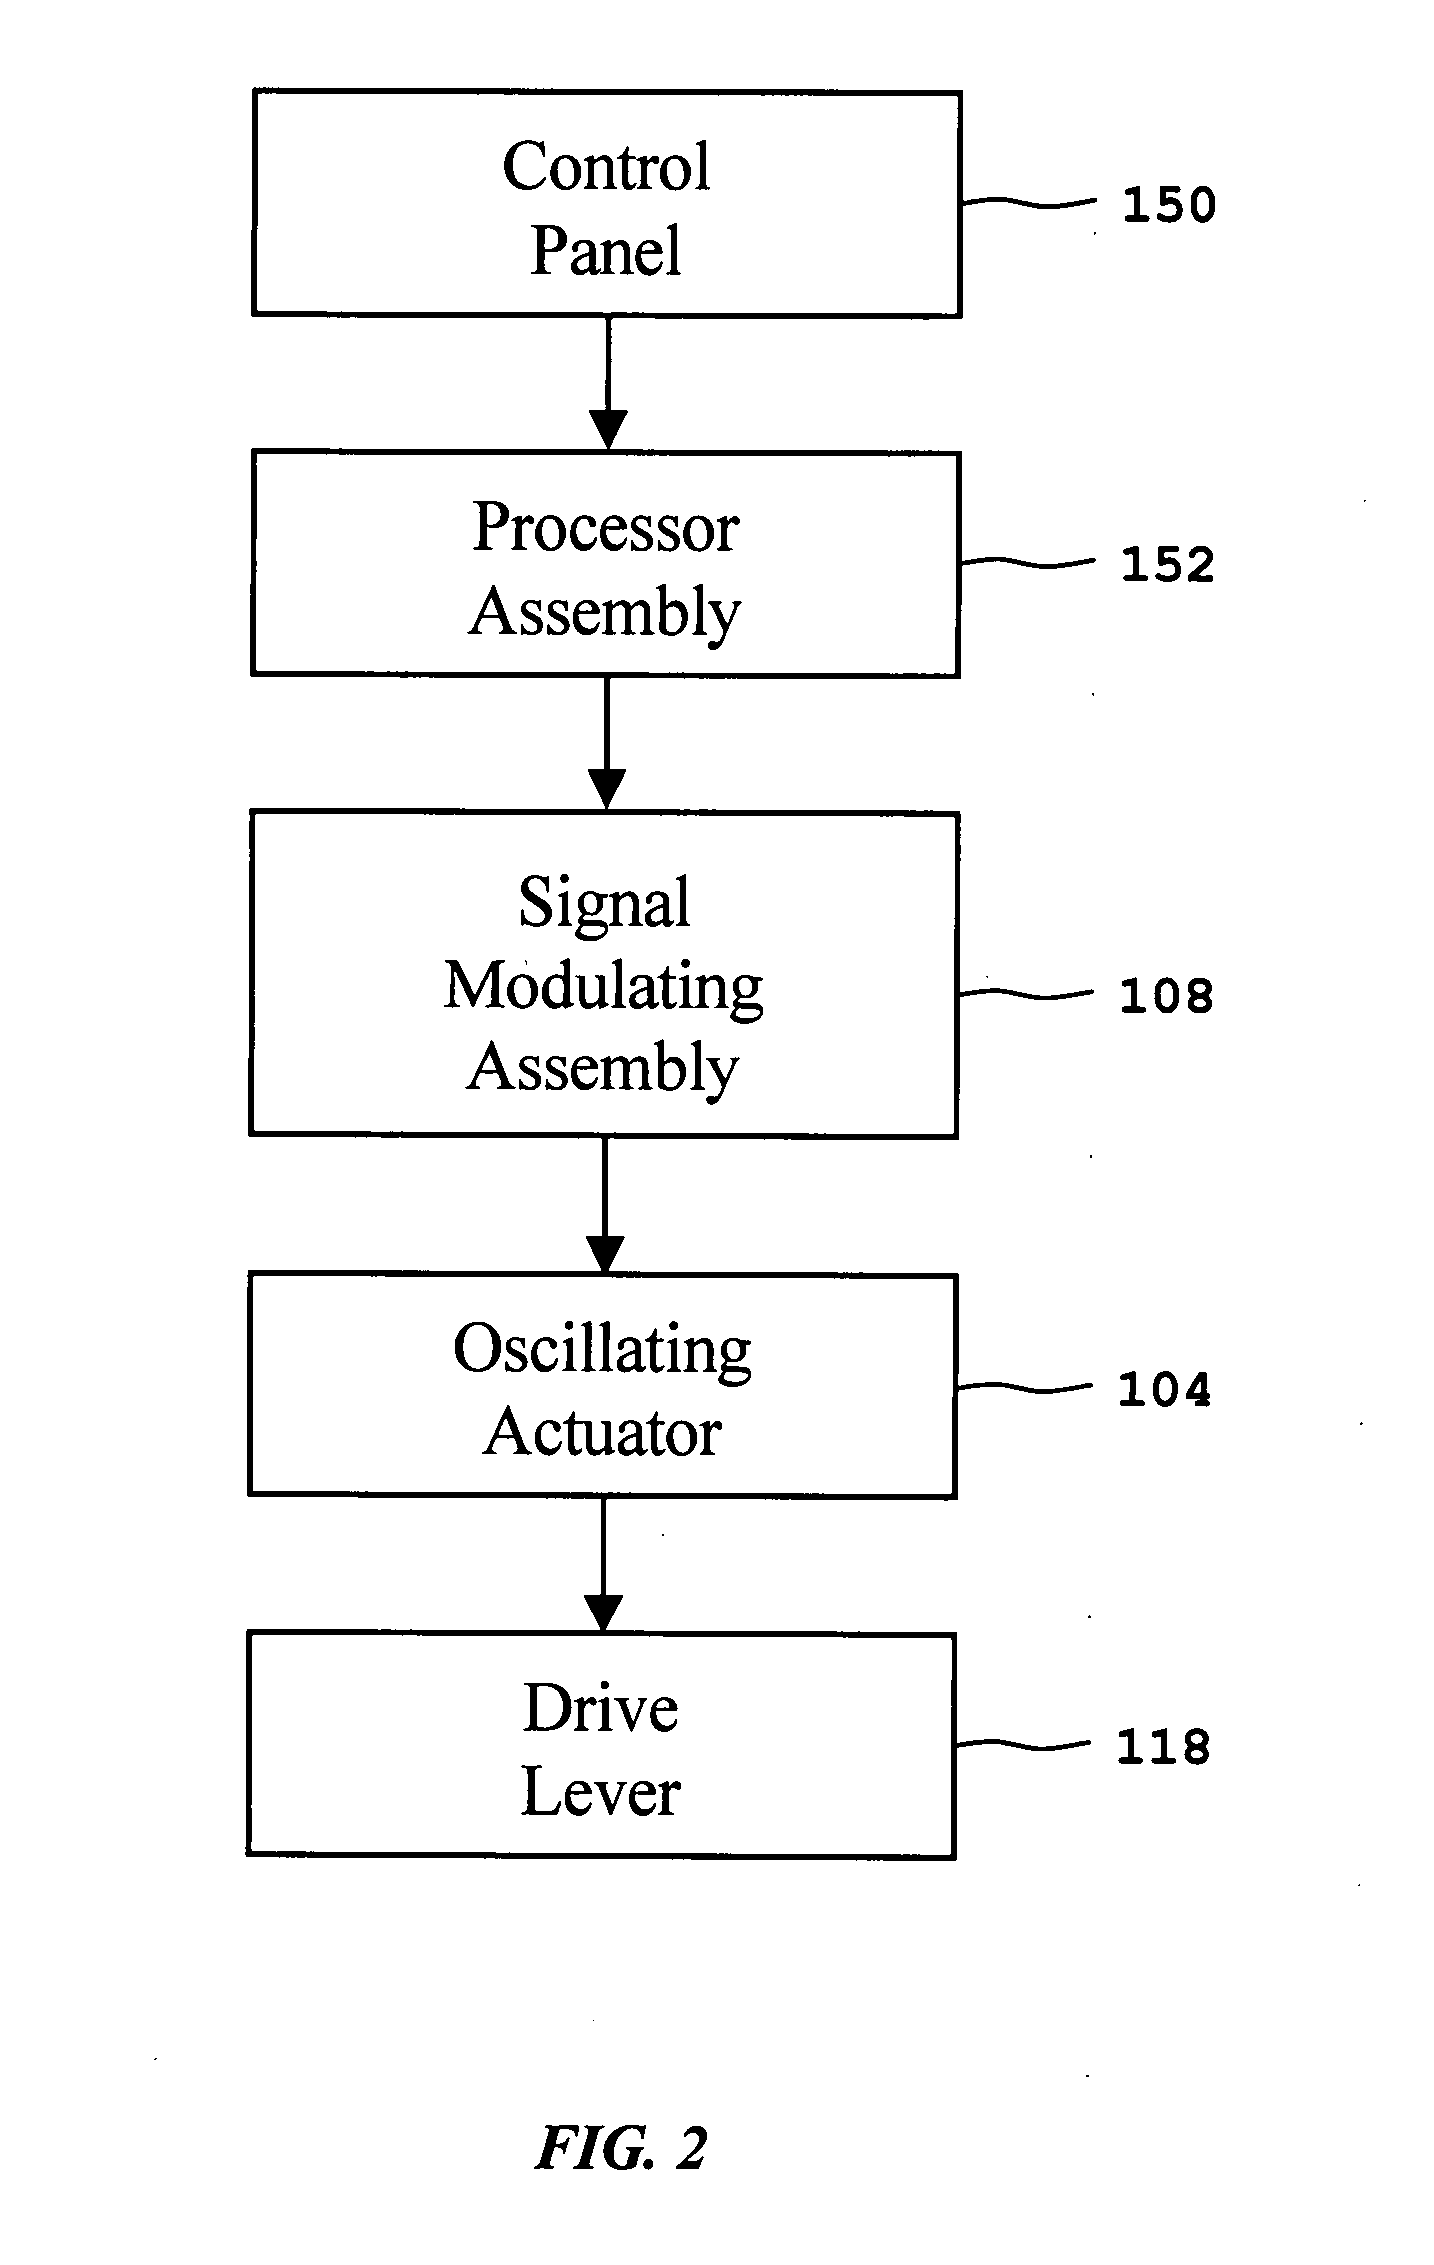 Mechanical loading apparatus having a signal modulating assembly